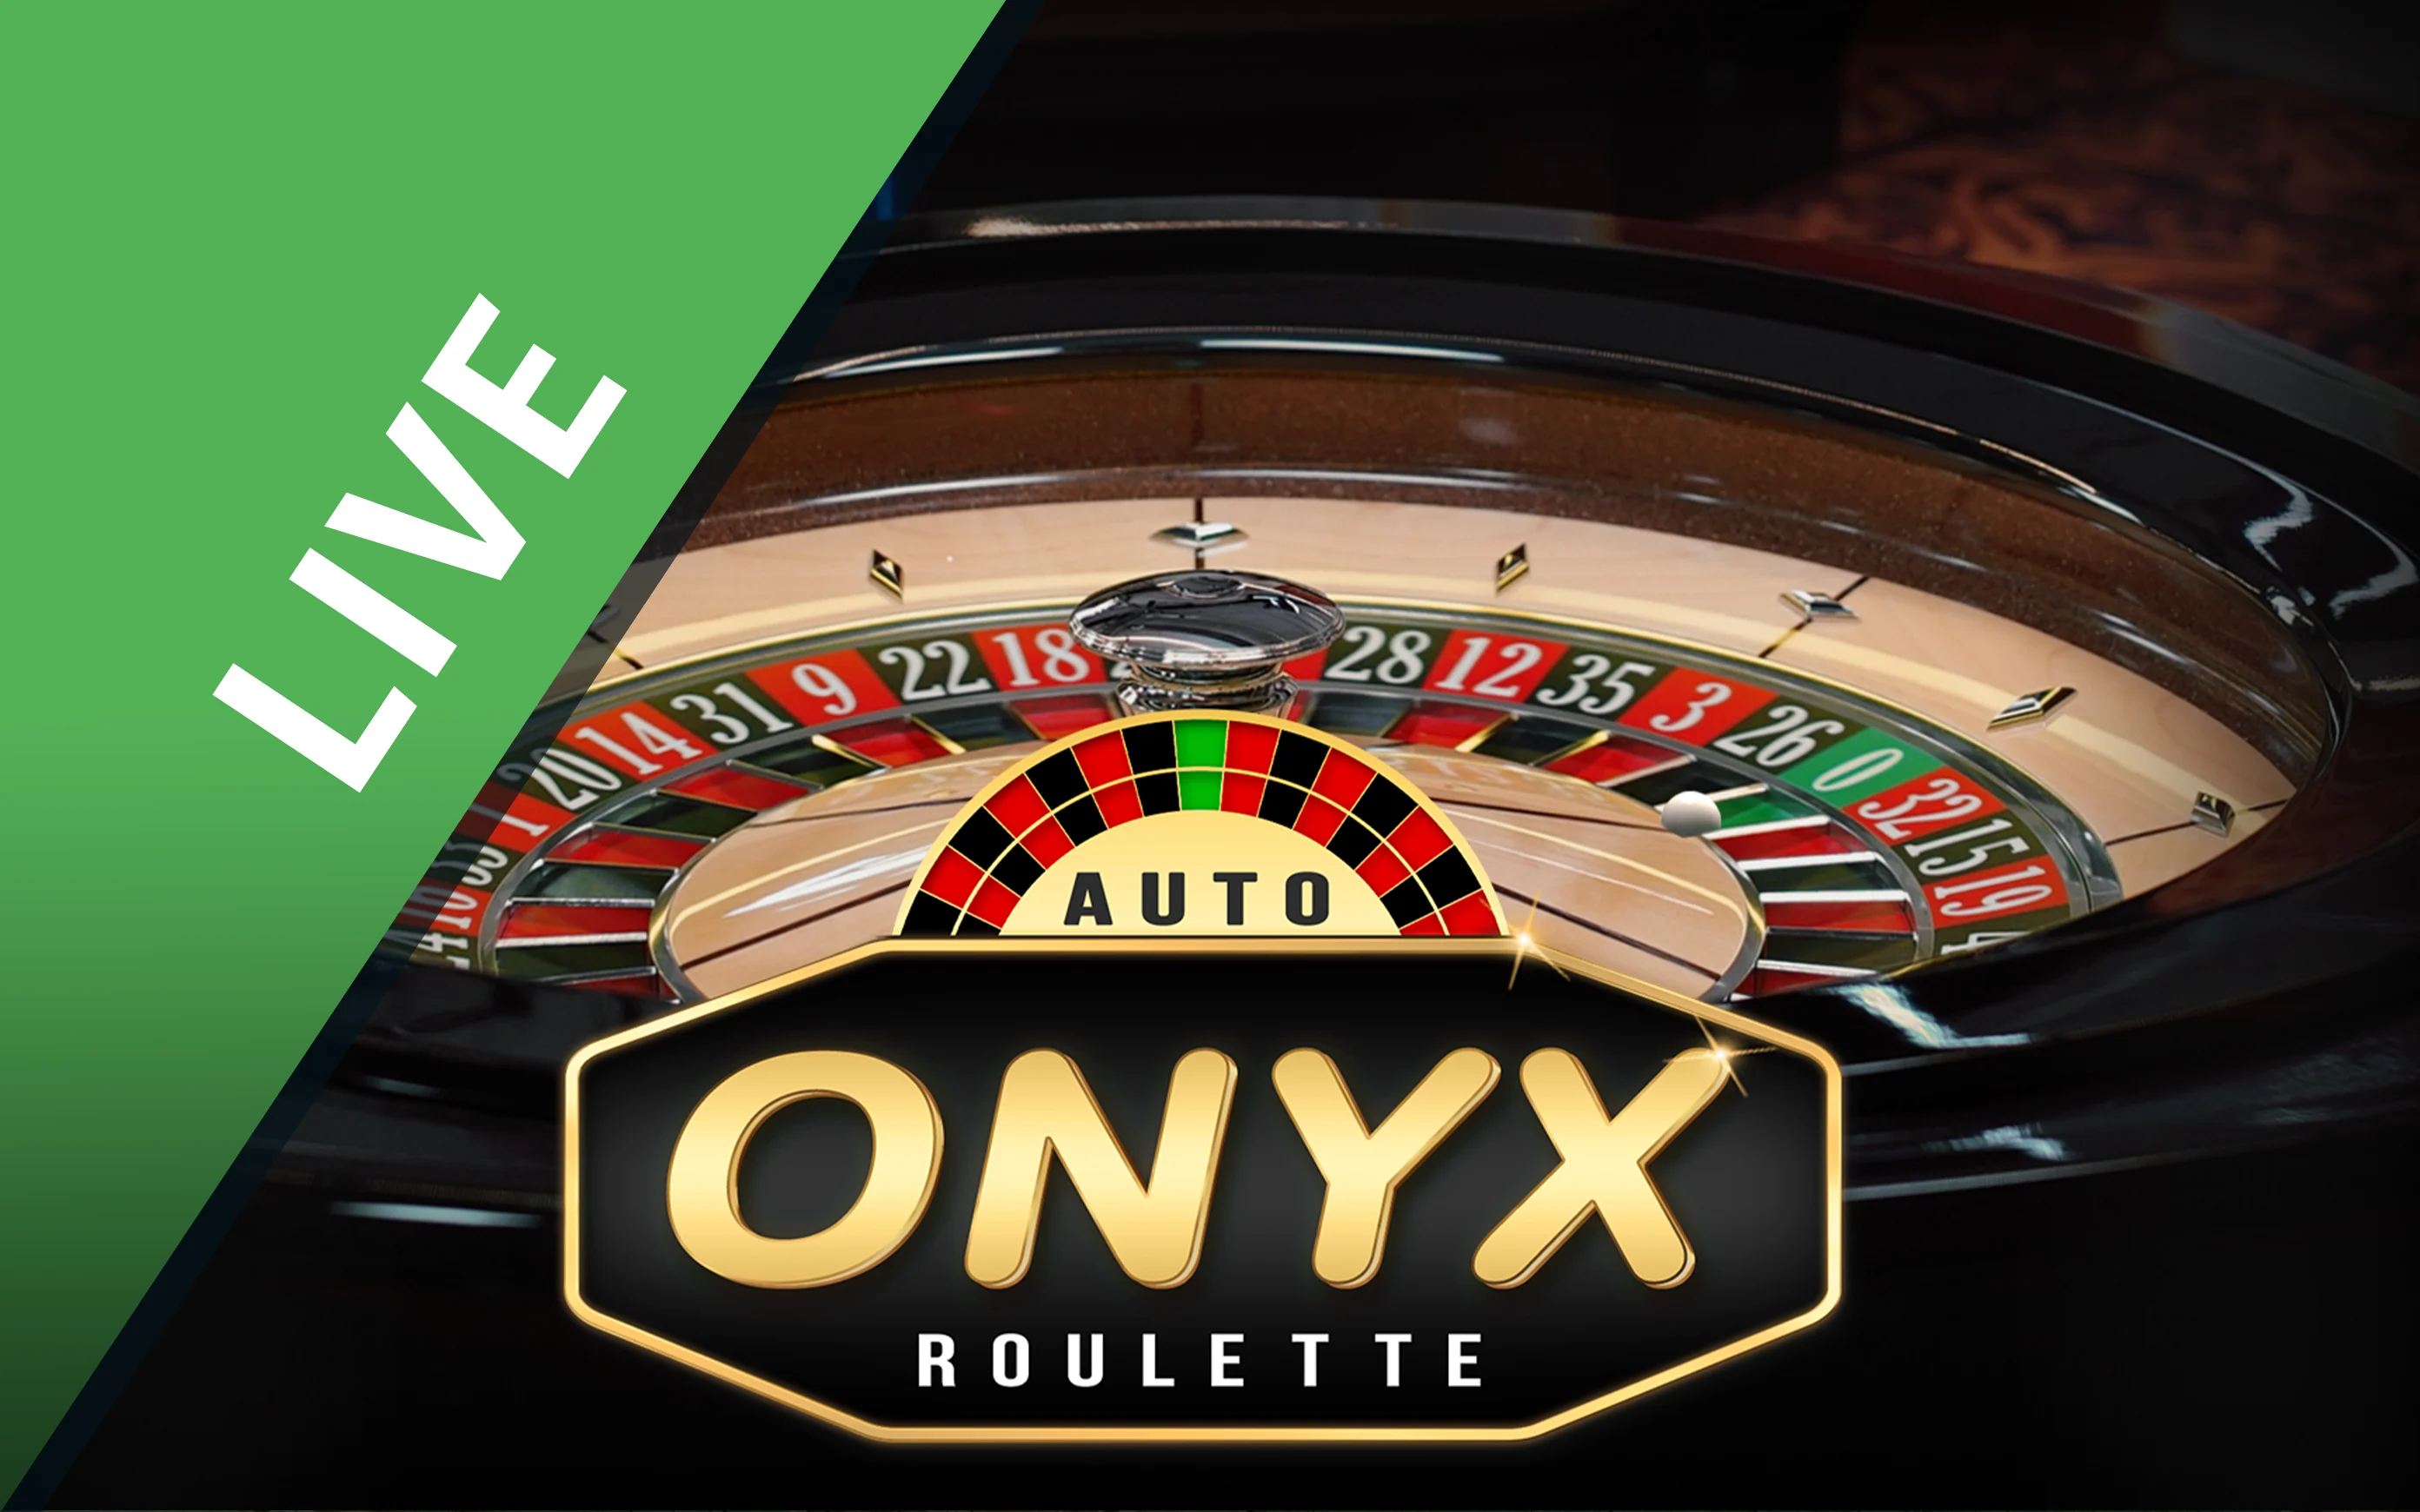 Juega a Onyx Roulette en el casino en línea de Starcasino.be